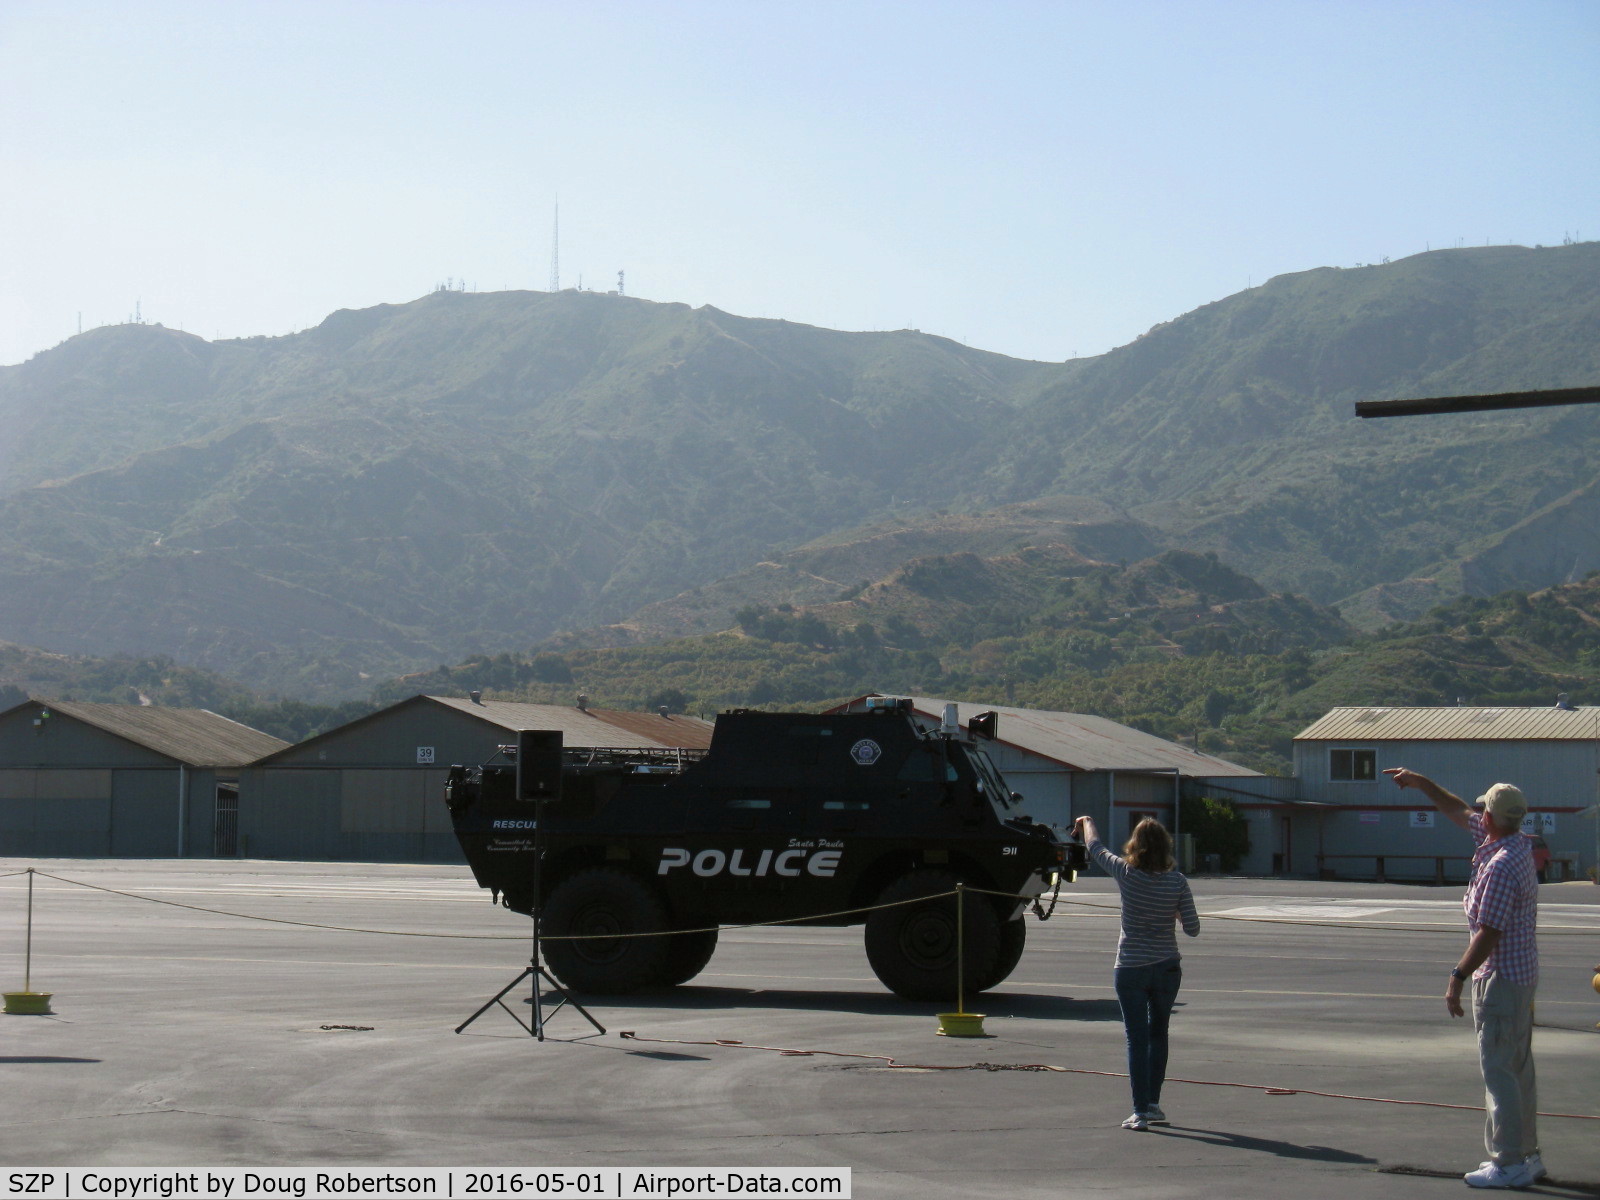 Santa Paula Airport (SZP) - Santa Paula Police Department Special Ops Vehicle